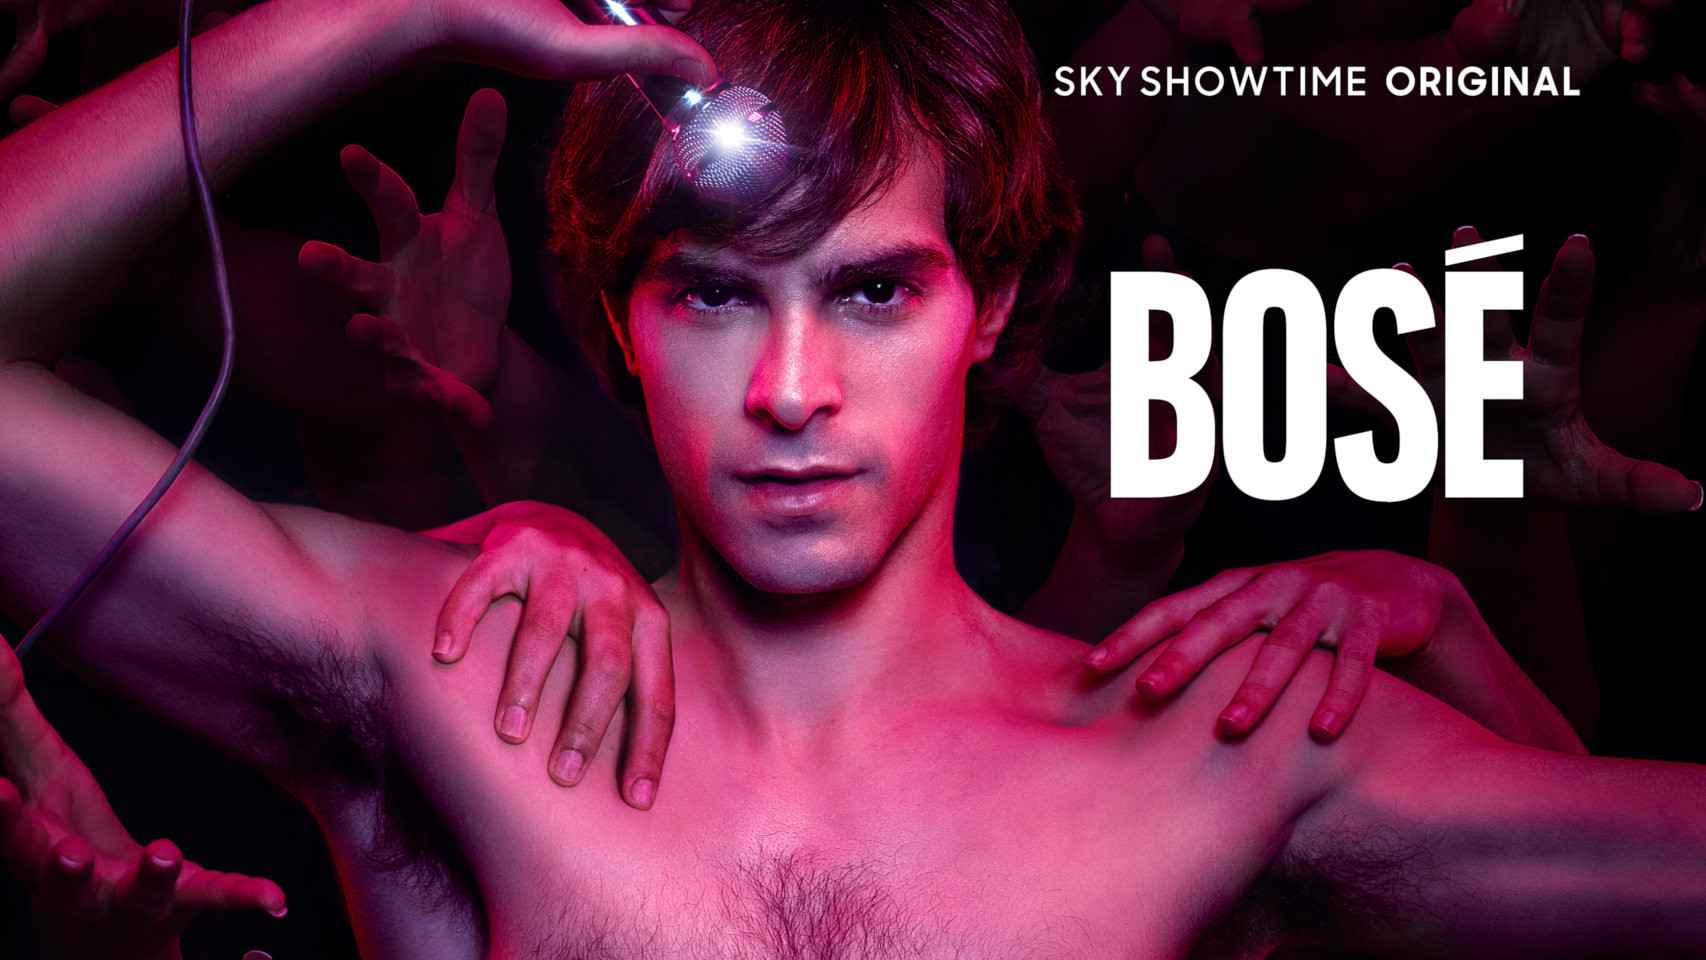 SkyShowtime tendrá series españolas originales como Bosé